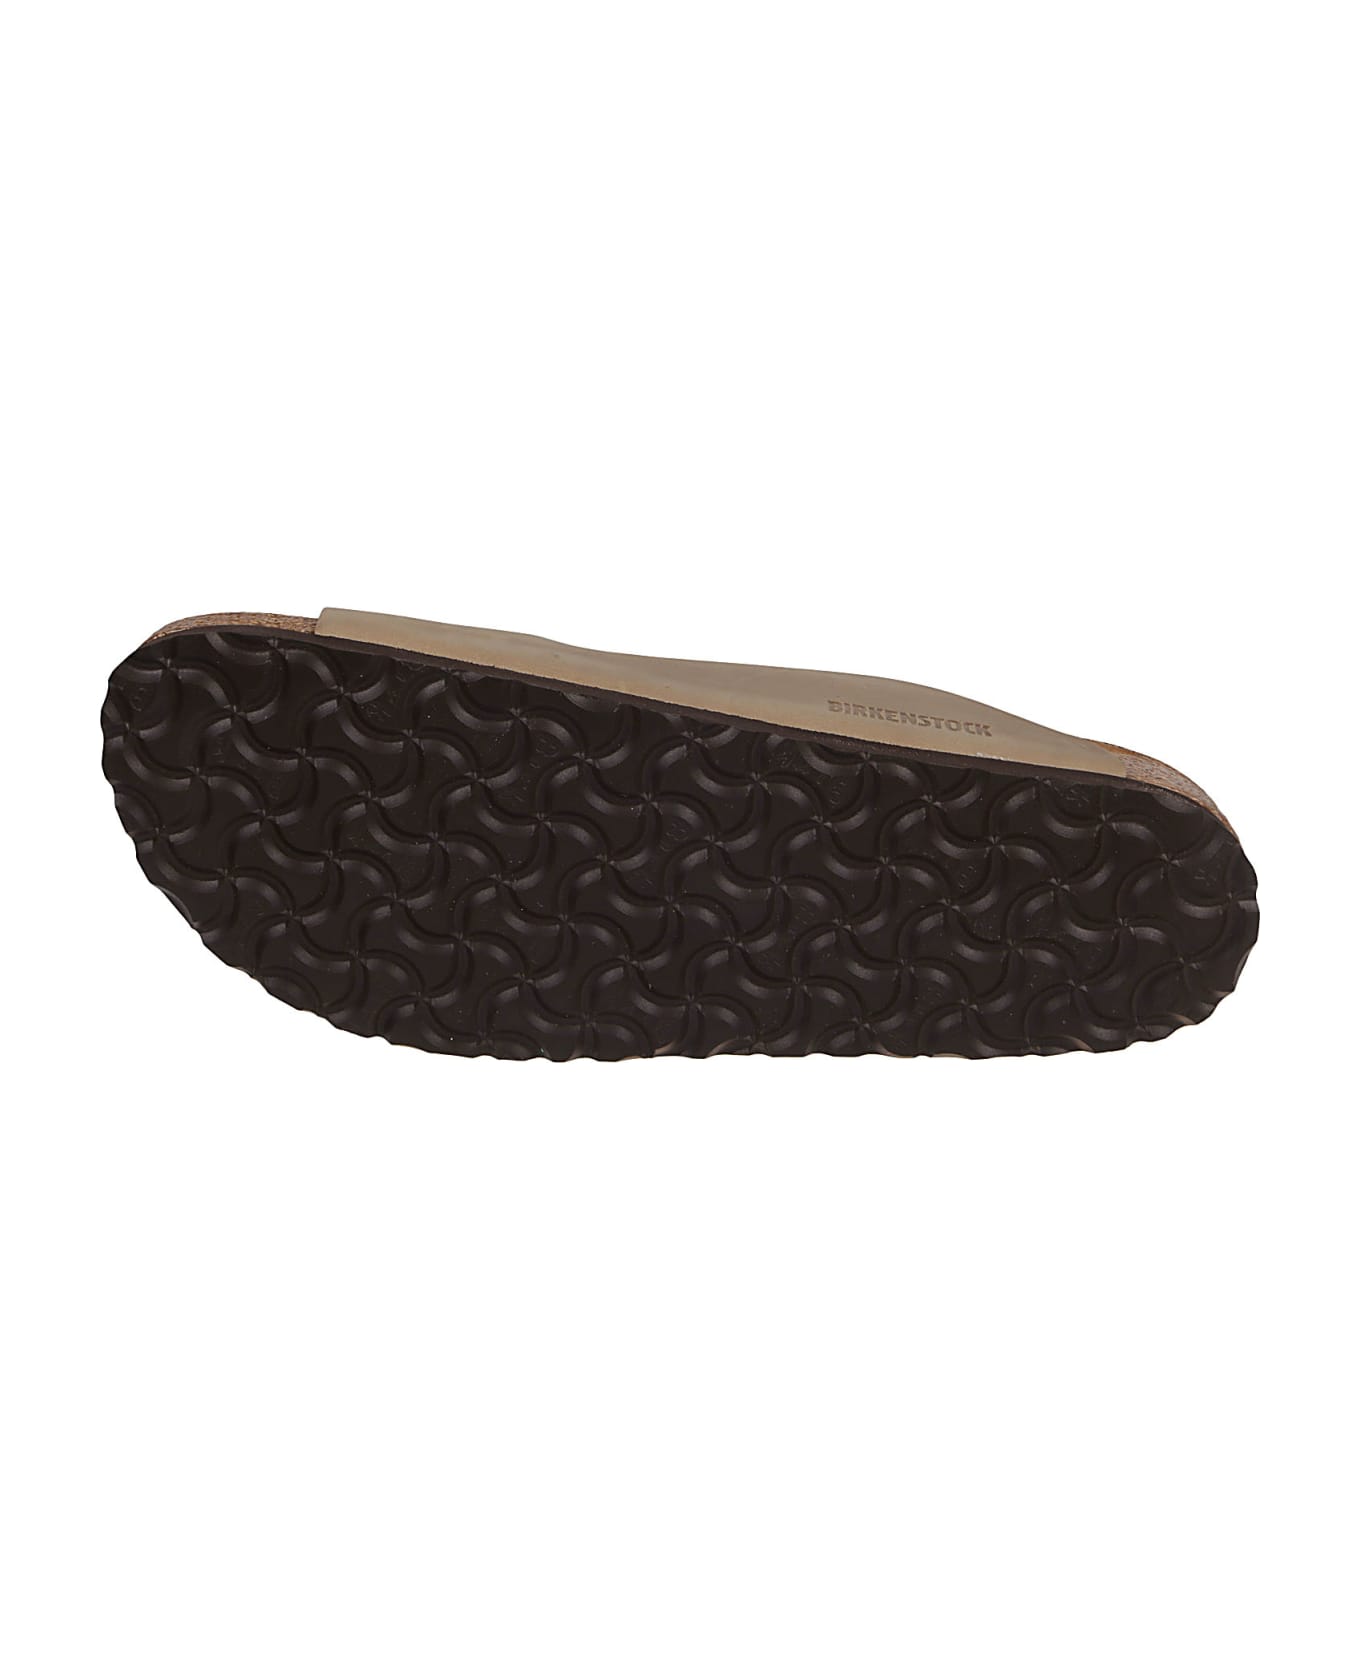 Birkenstock Arizona Sandals - Tabacco Brown